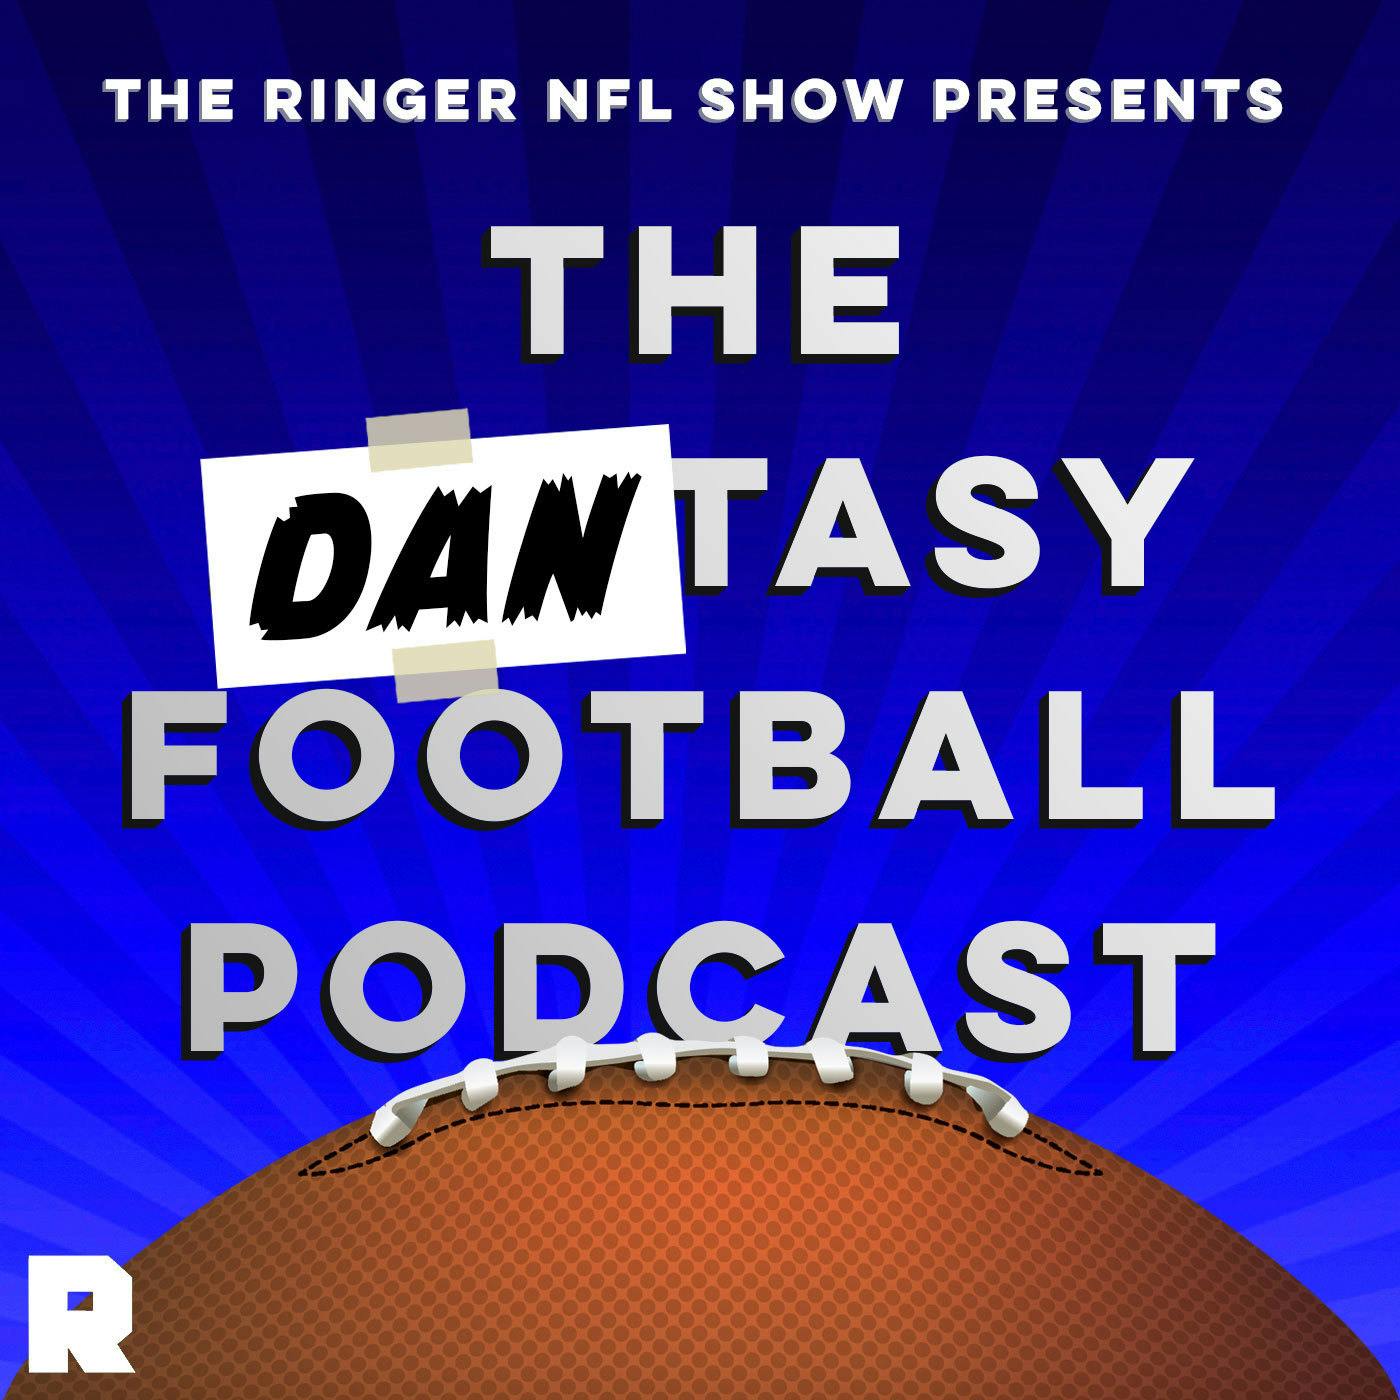 Todd Gurley to Atlanta, Melvin Gordon to Denver, and a Fantasy Mailbag! | The Dantasy Football Podcast